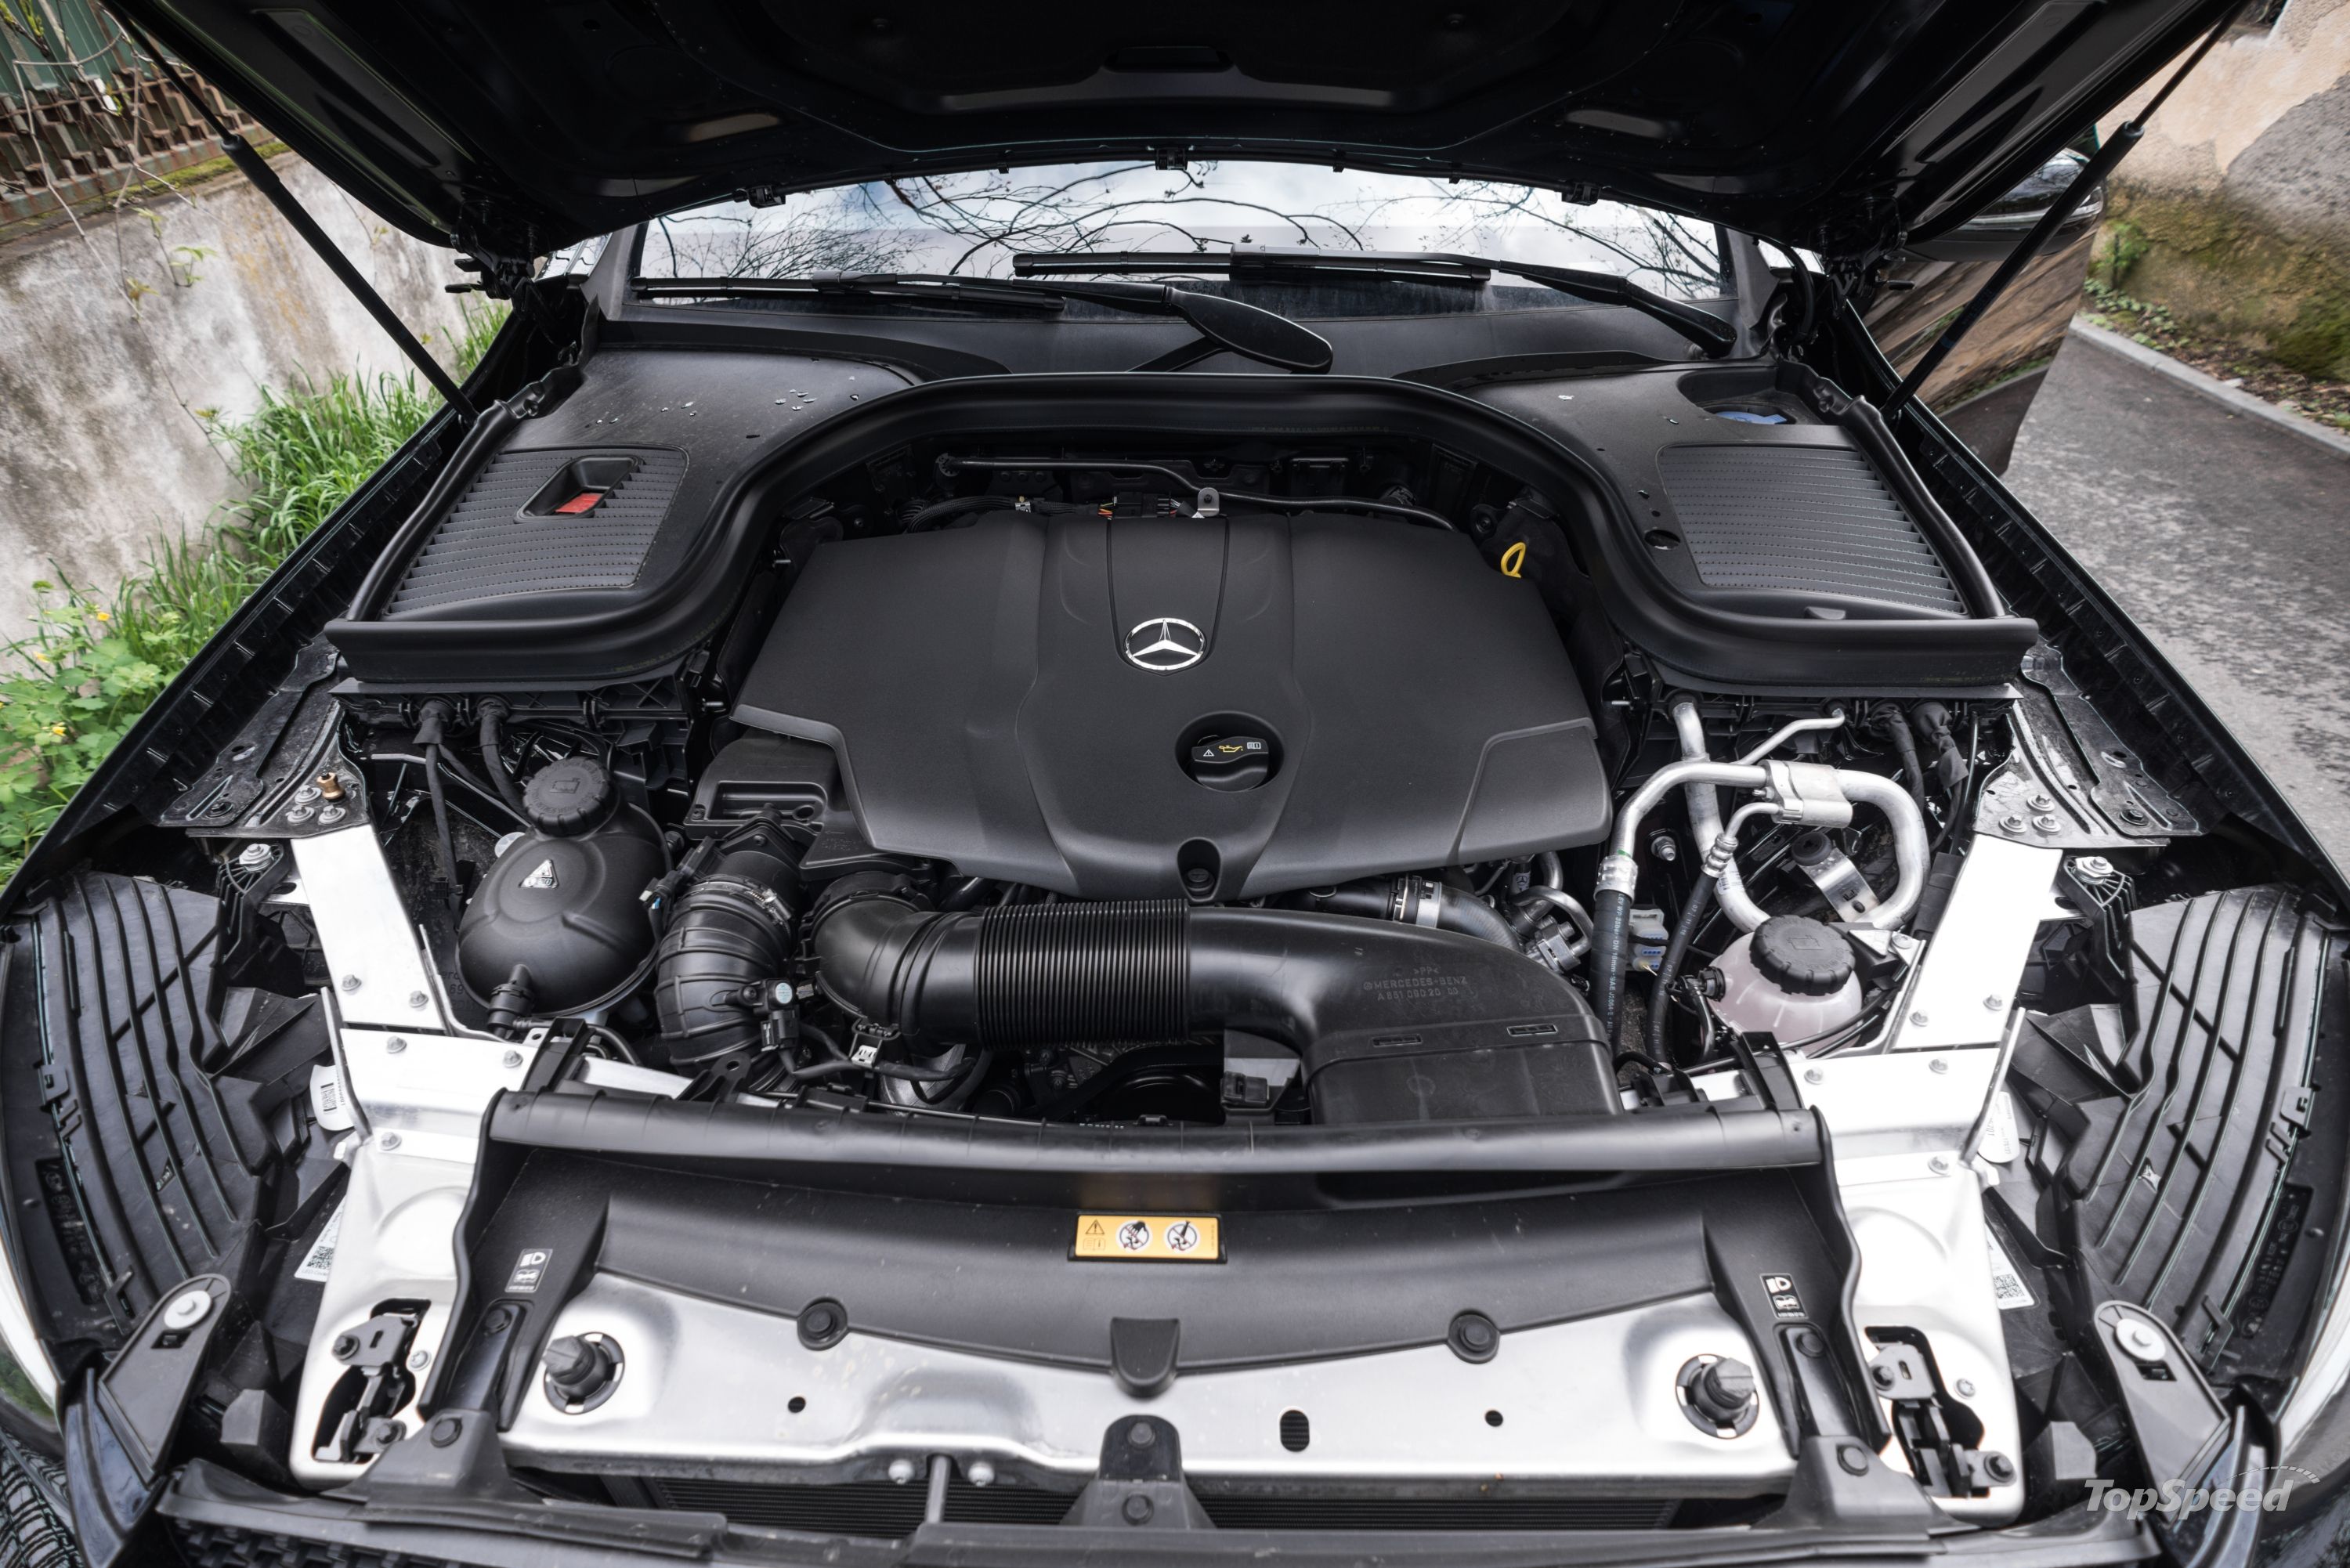 2019 Mercedes GLC Coupe 250d 4Matic - driven